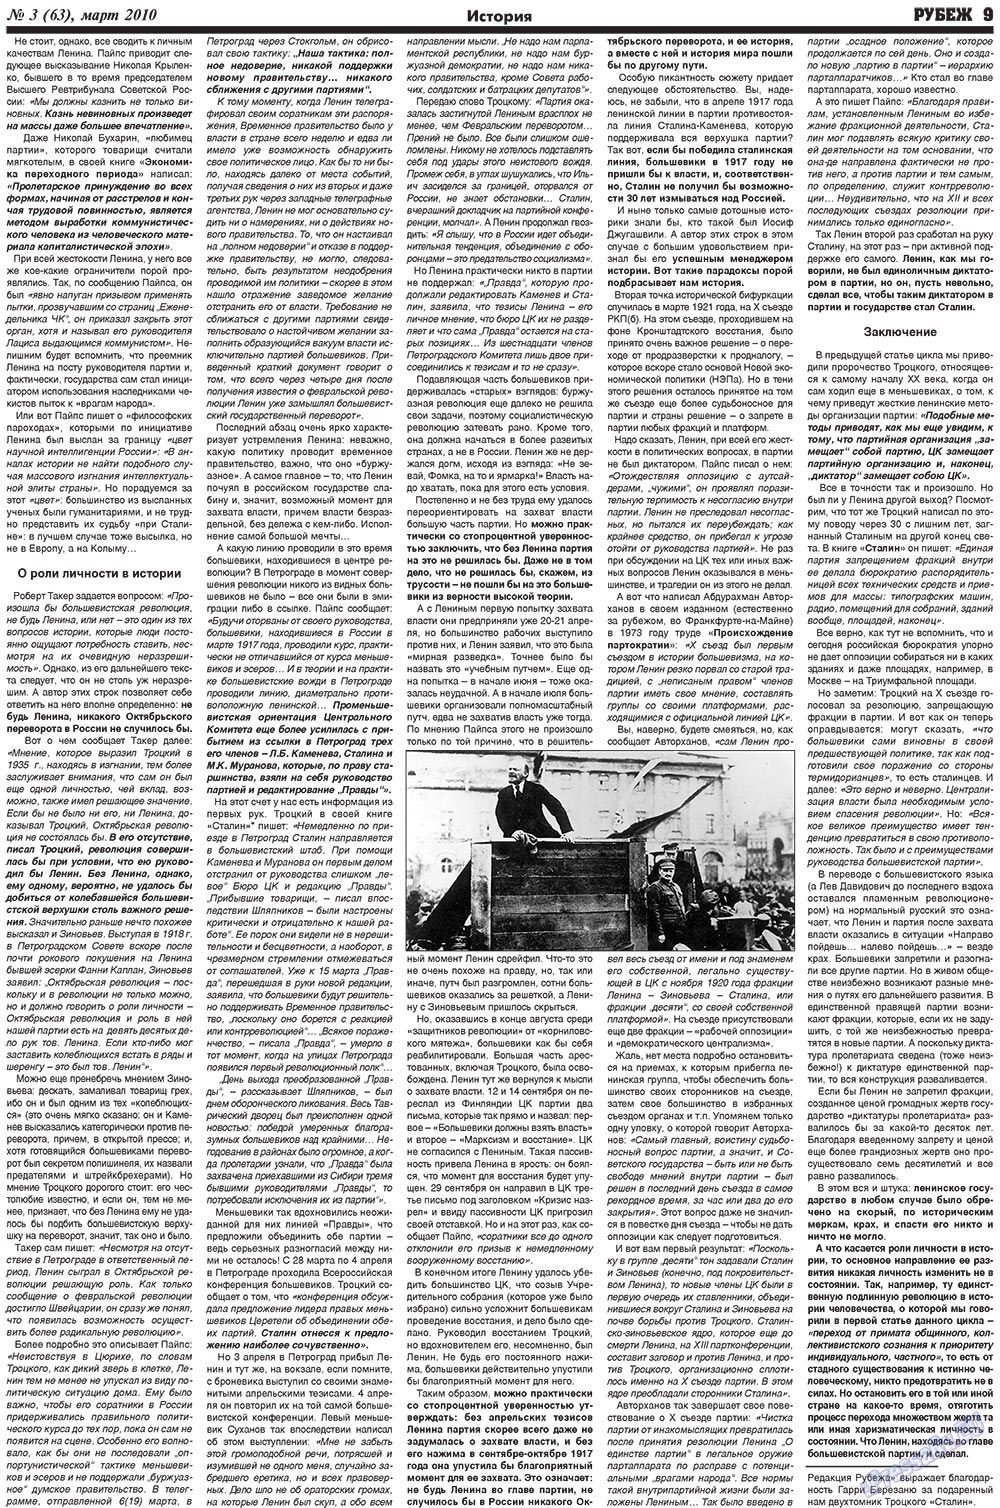 Рубеж, газета. 2010 №3 стр.9